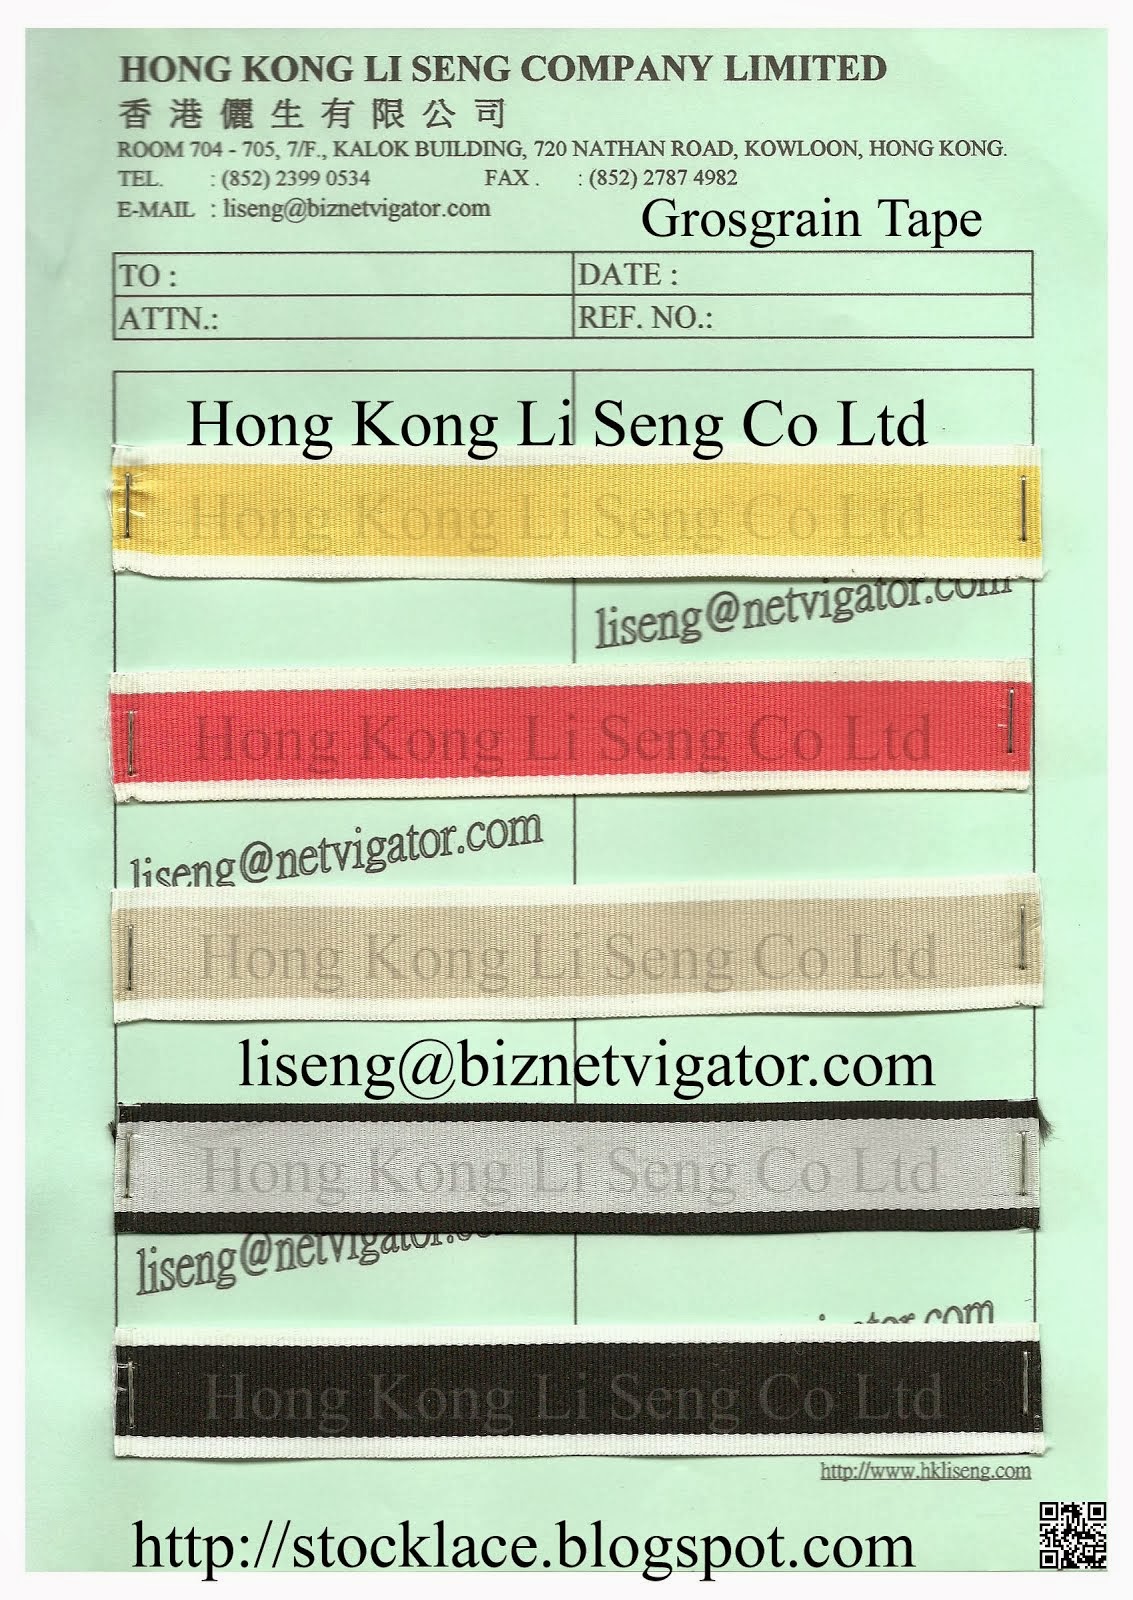 Grosgrain Tape Lace Ribbon Manufacturer Wholesale and Supplier - Hong Kong Li Seng Co Ltd